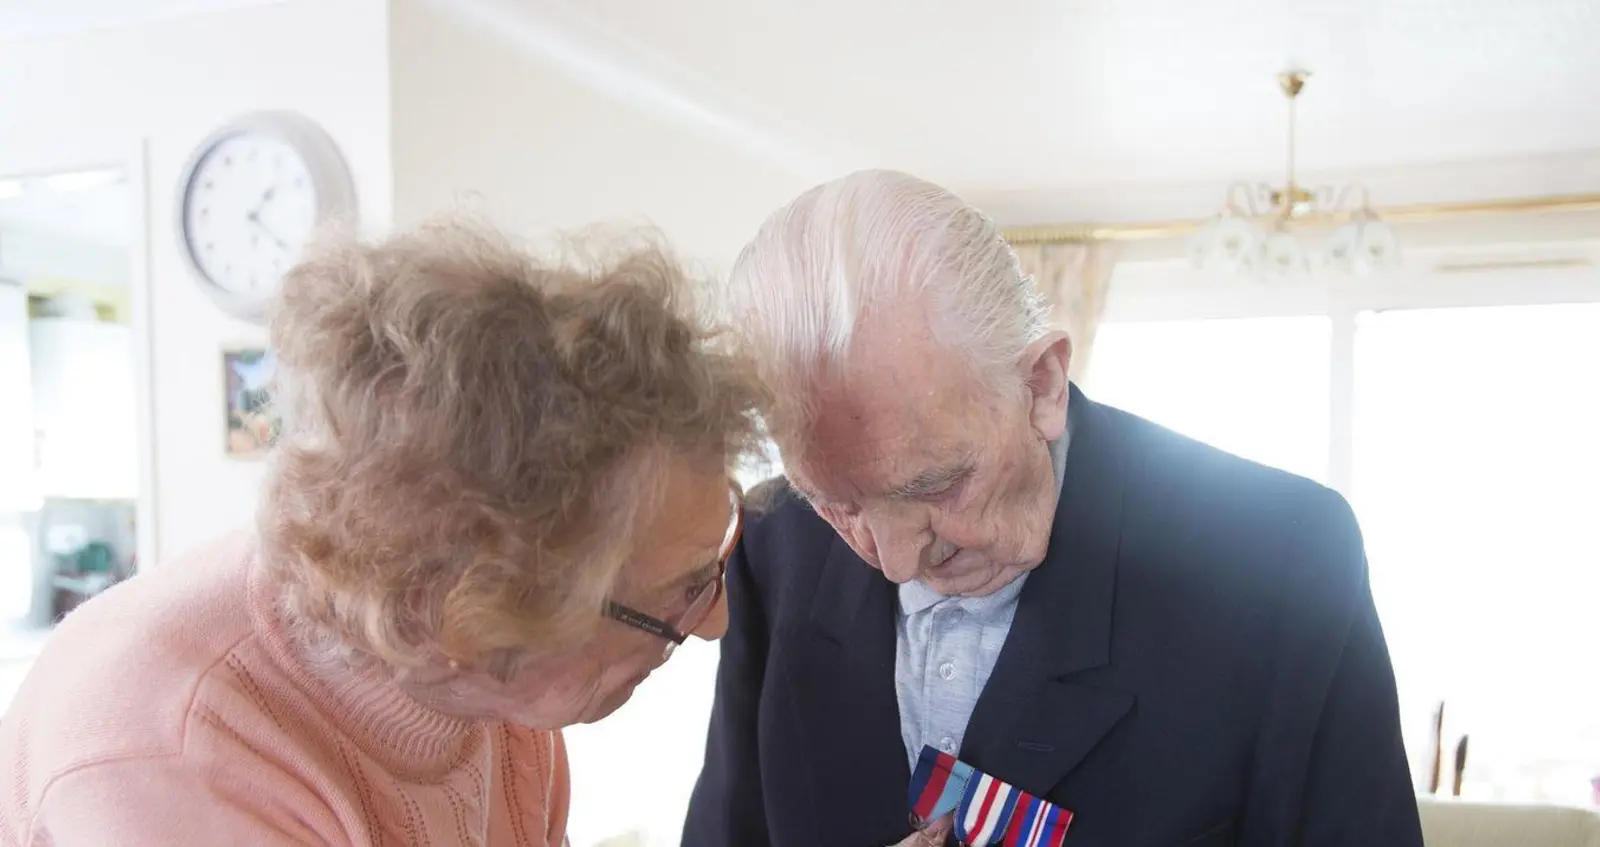 Veteran Reggie's wife helping him pin his medals